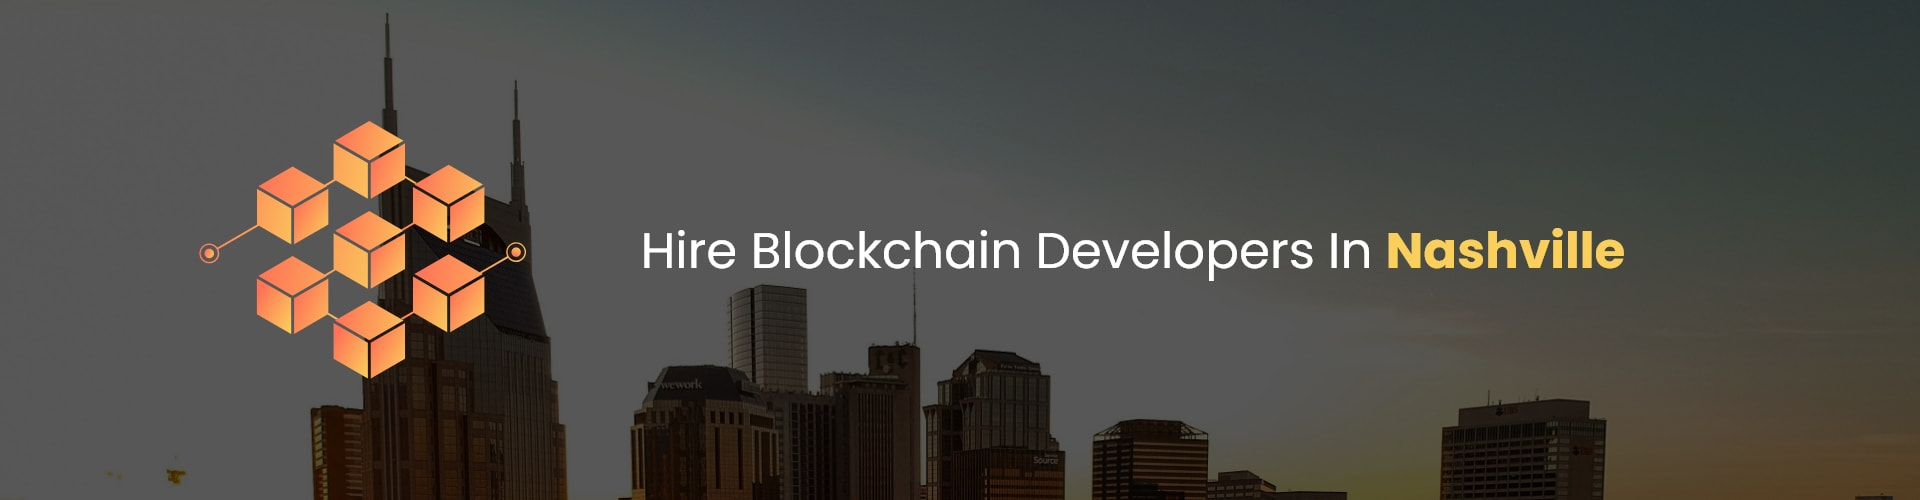 hire blockchain developers in nashville